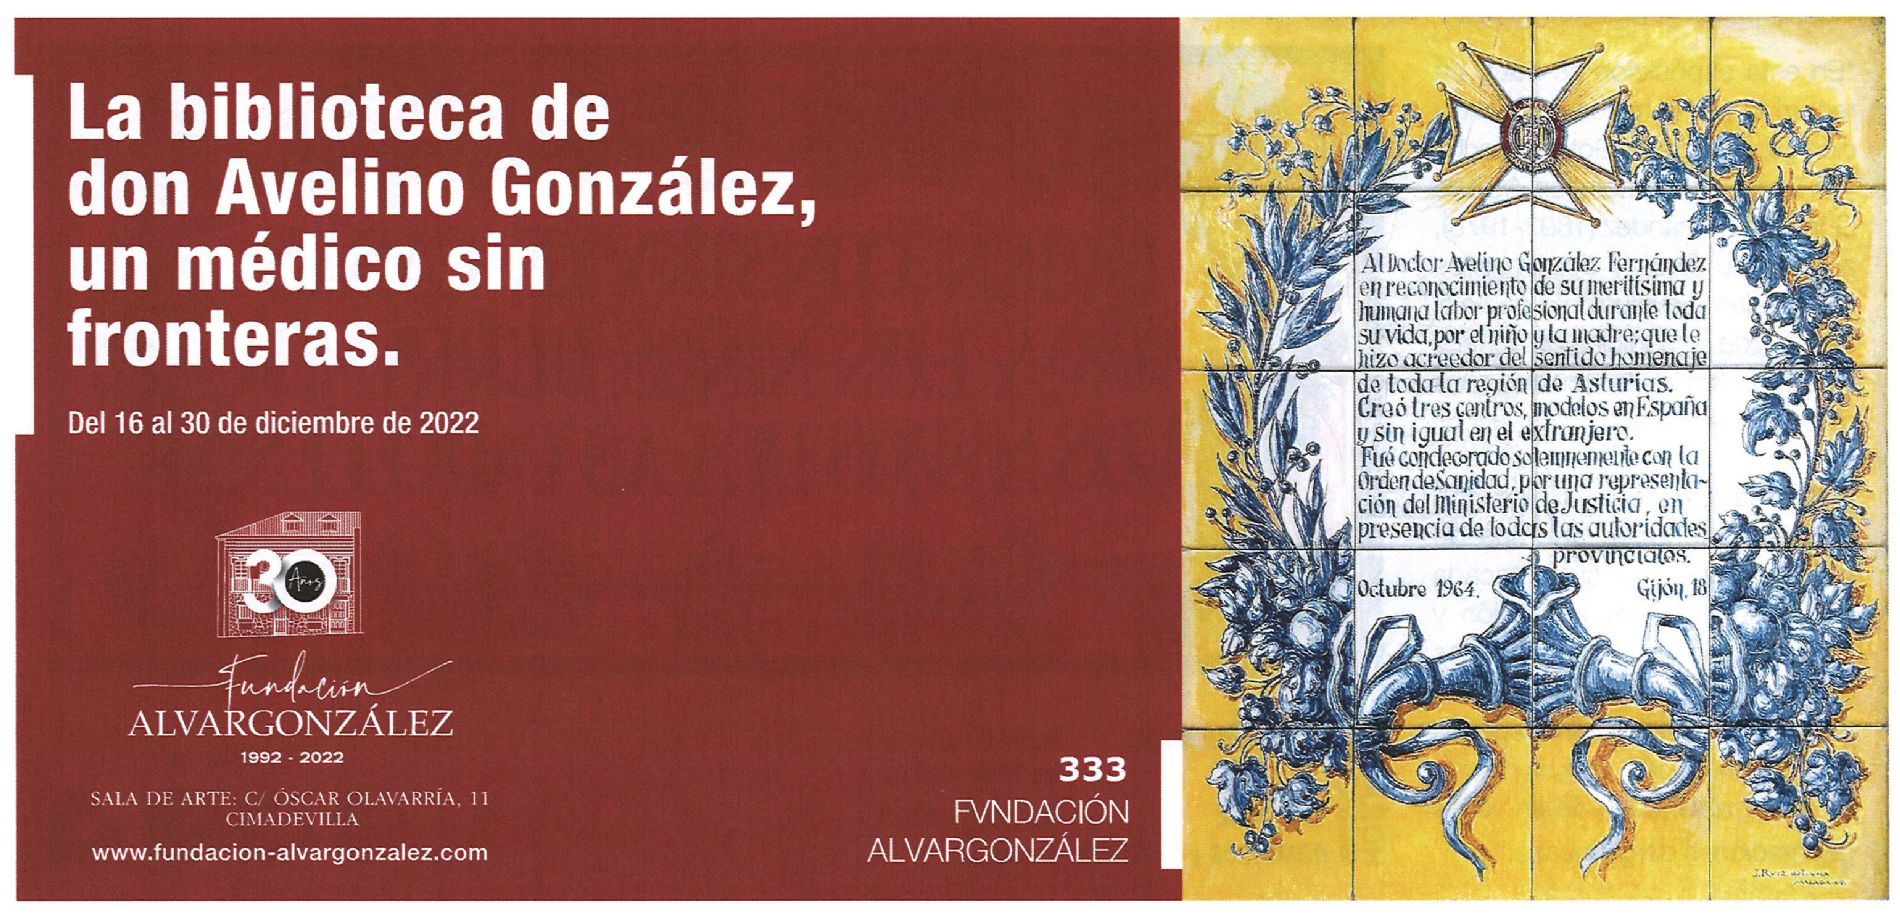 La biblioteca de don Avelino González